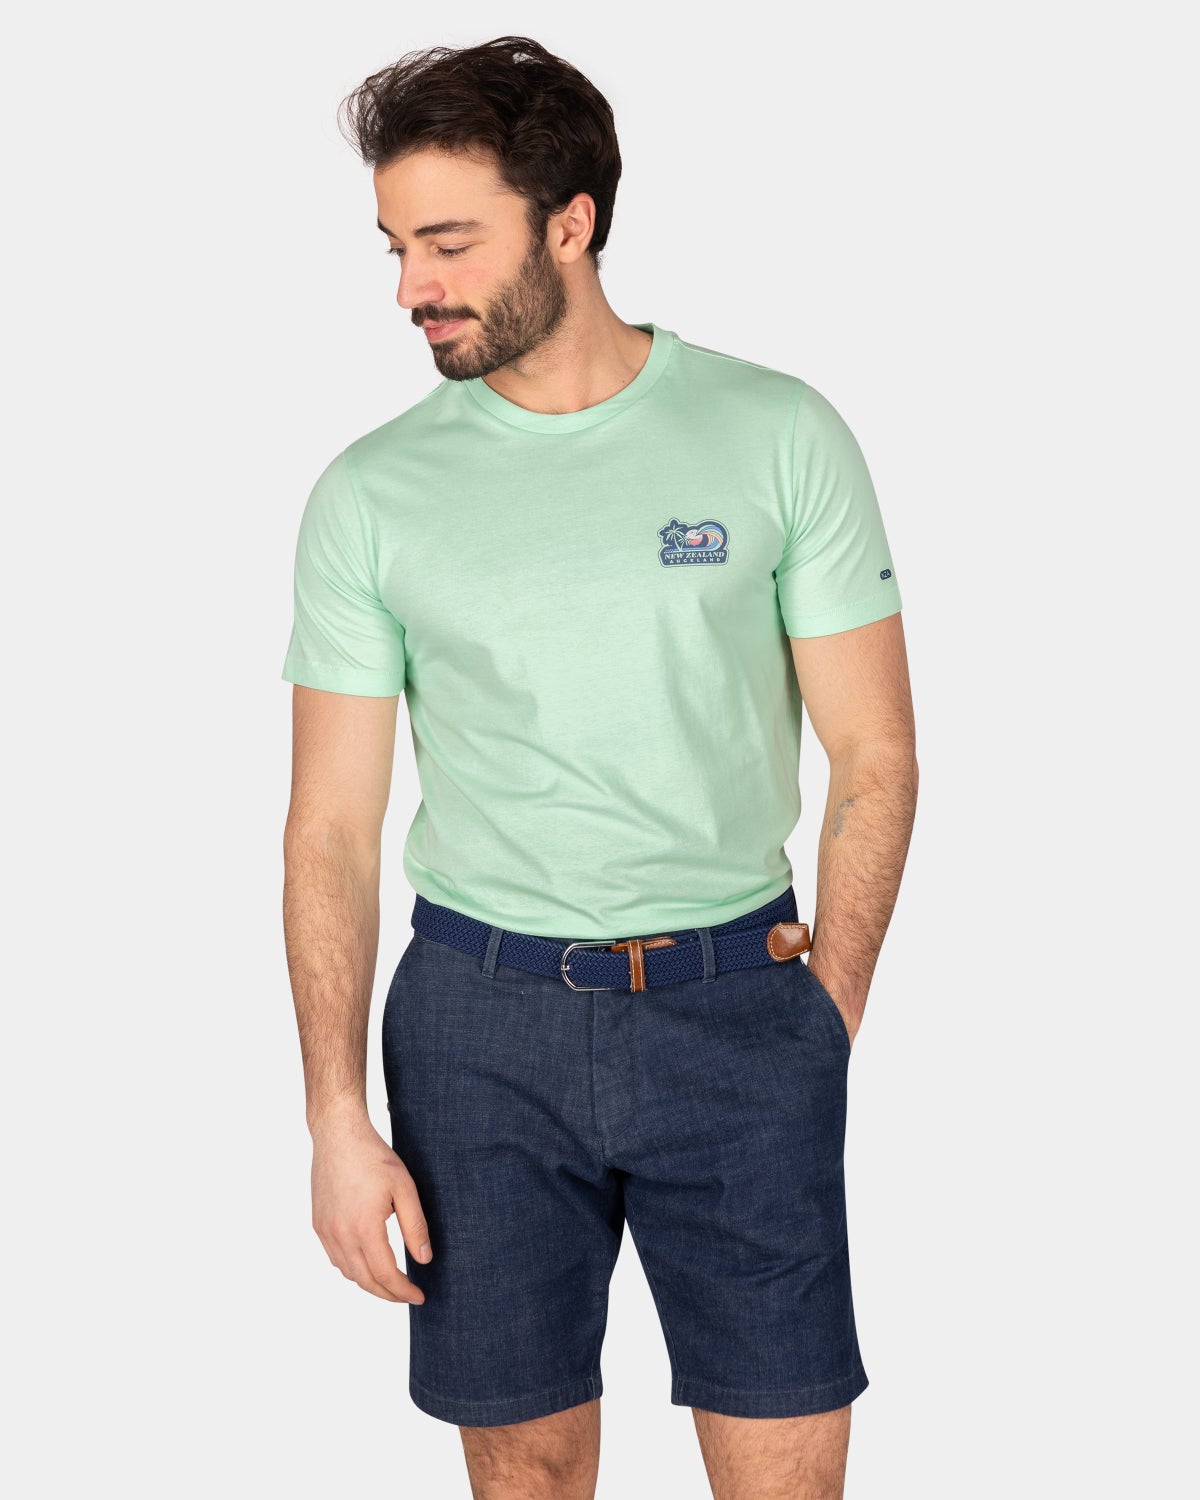 Round neck T-shirt - Teal Green